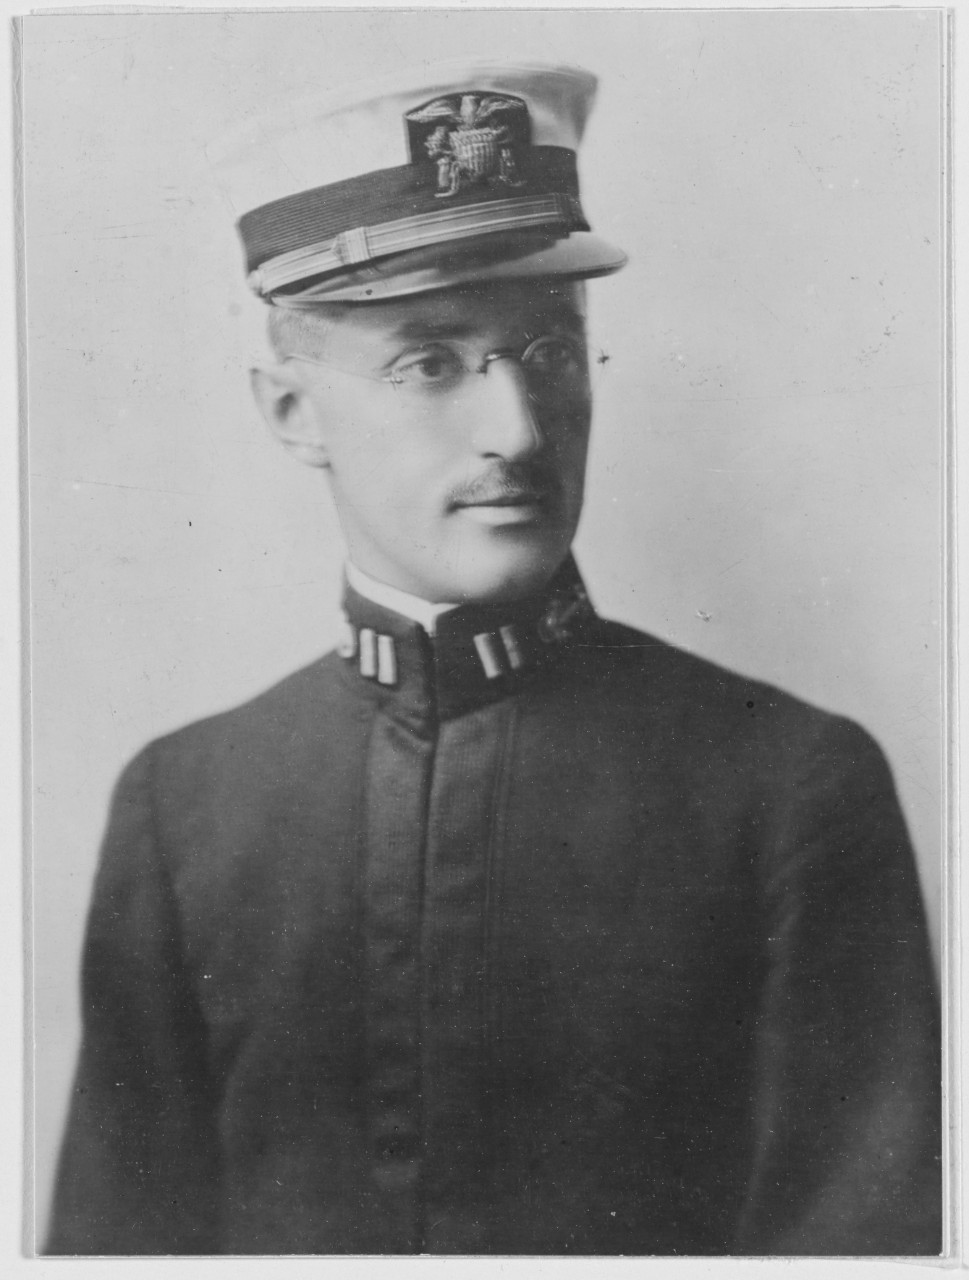 Lieutenant Joseph R. Hayden, USN Reserve Force